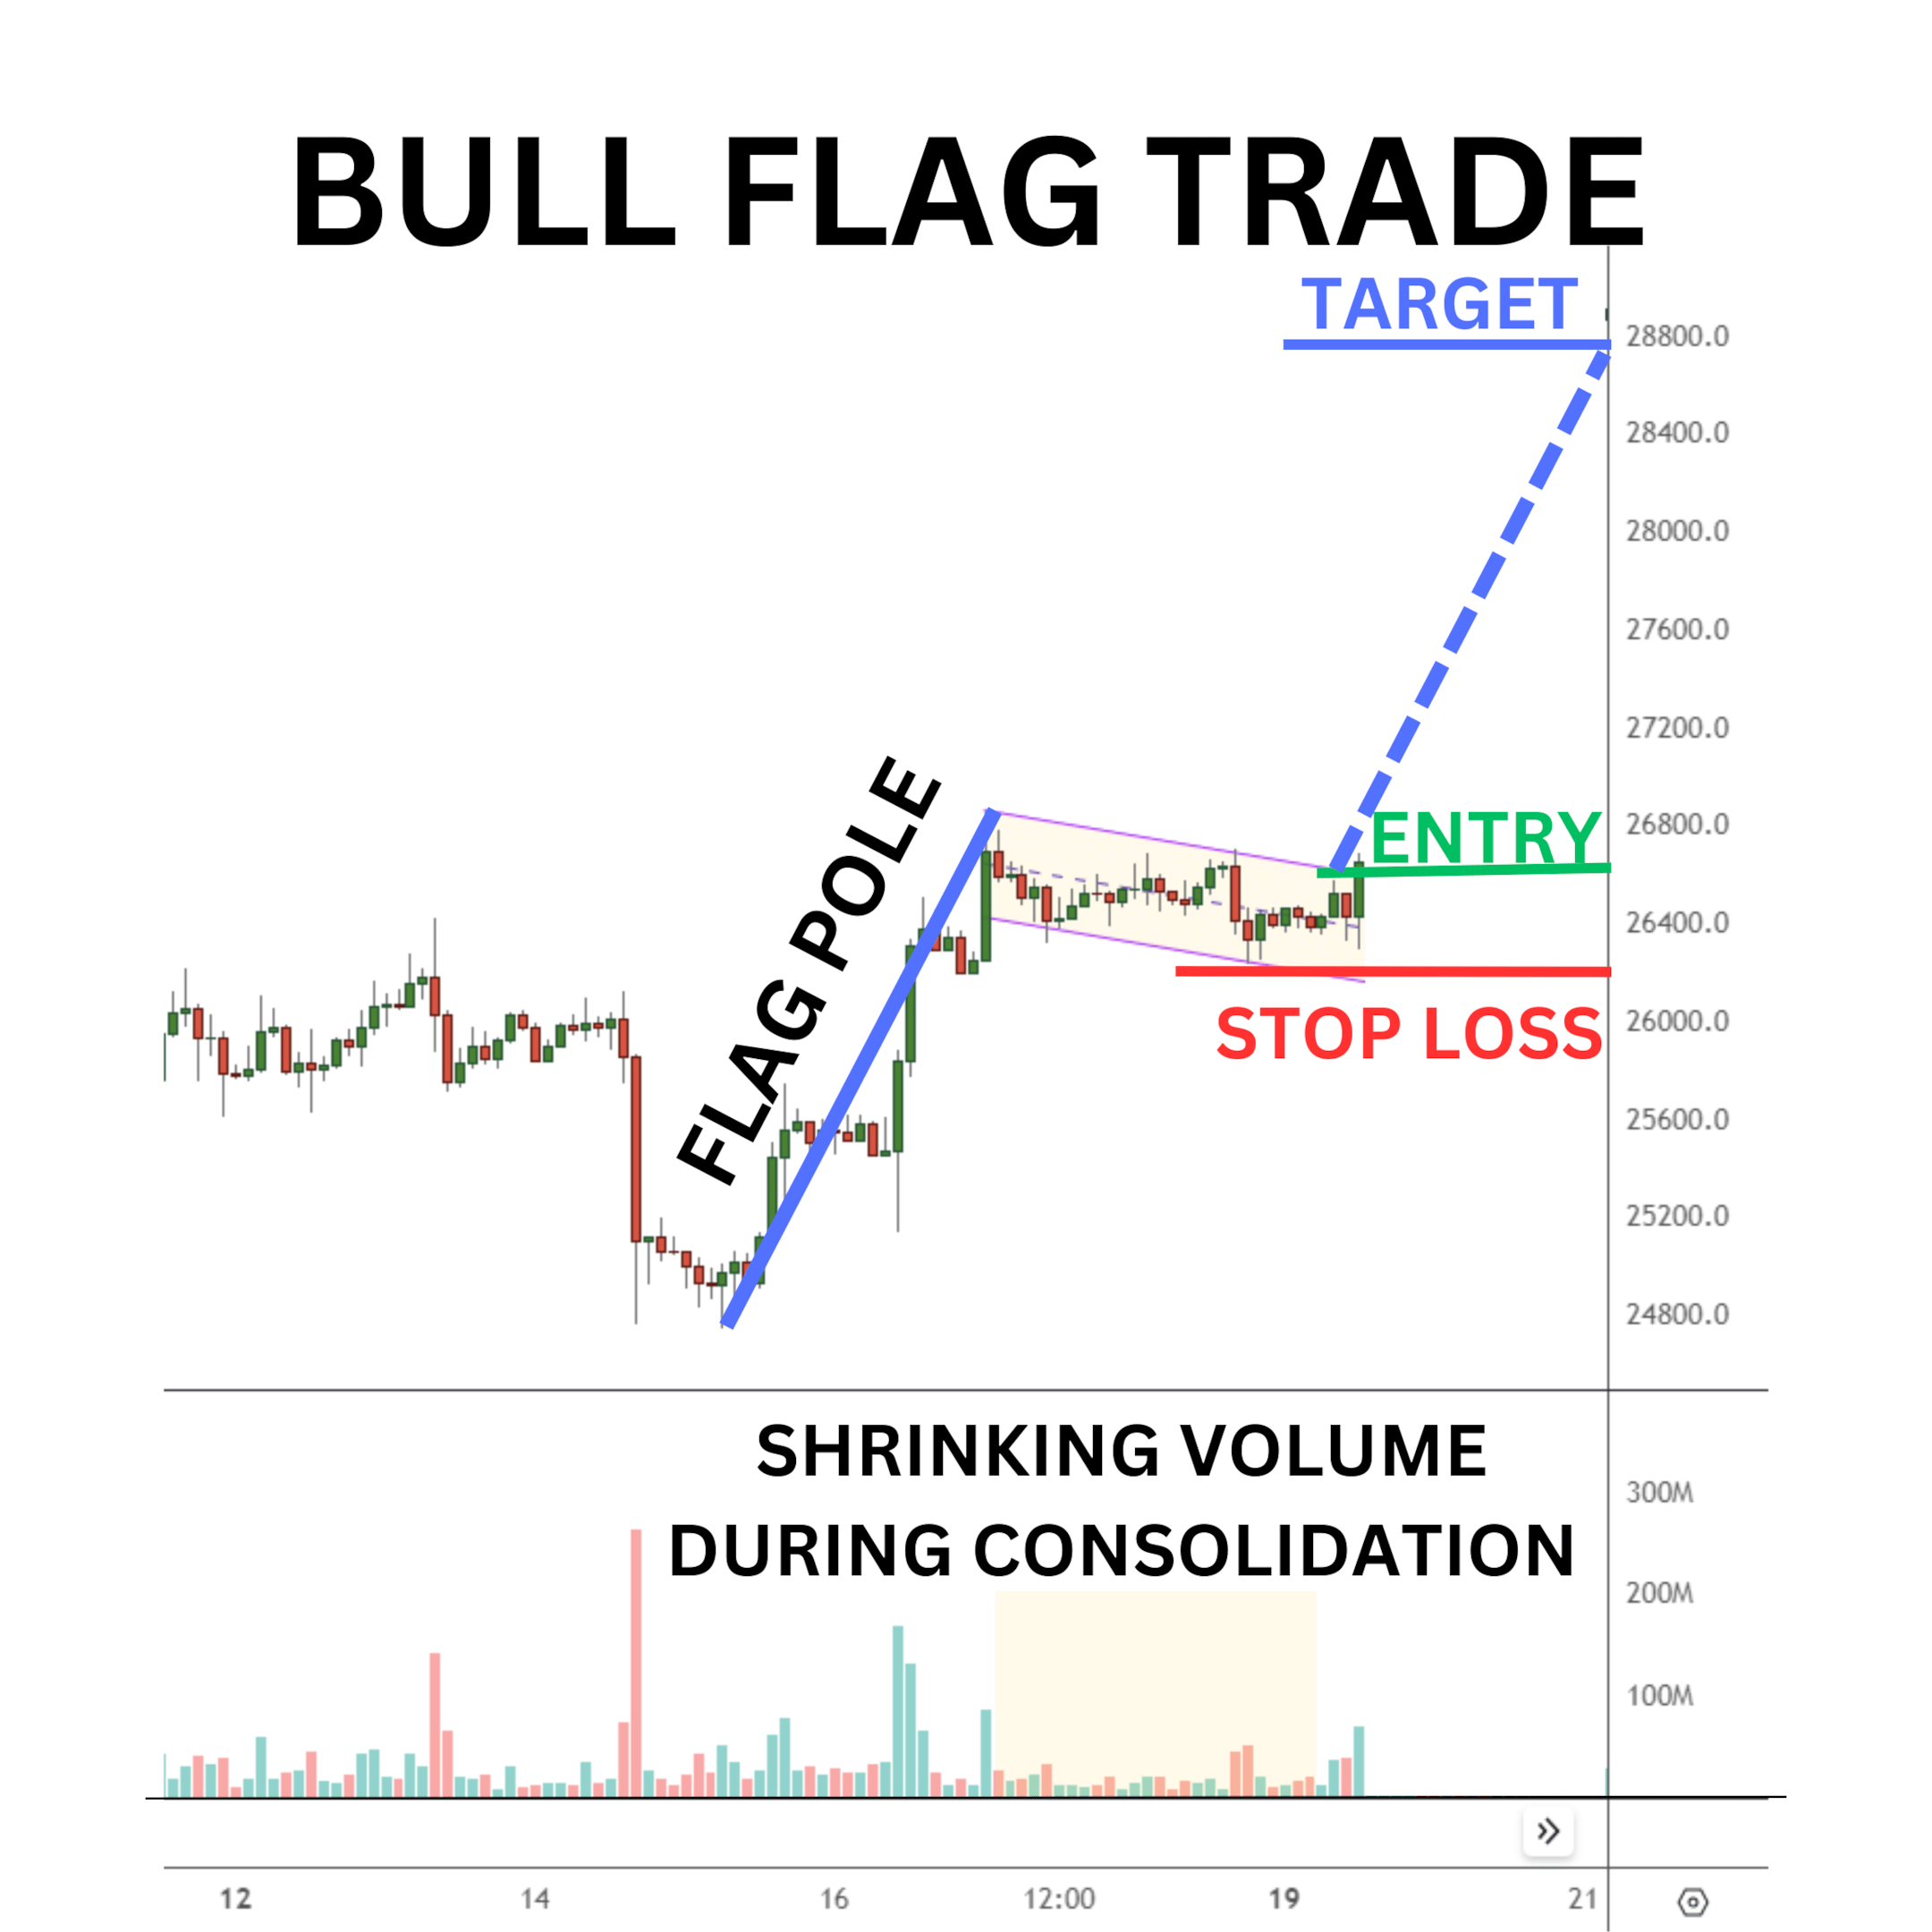 Bull flag trade example